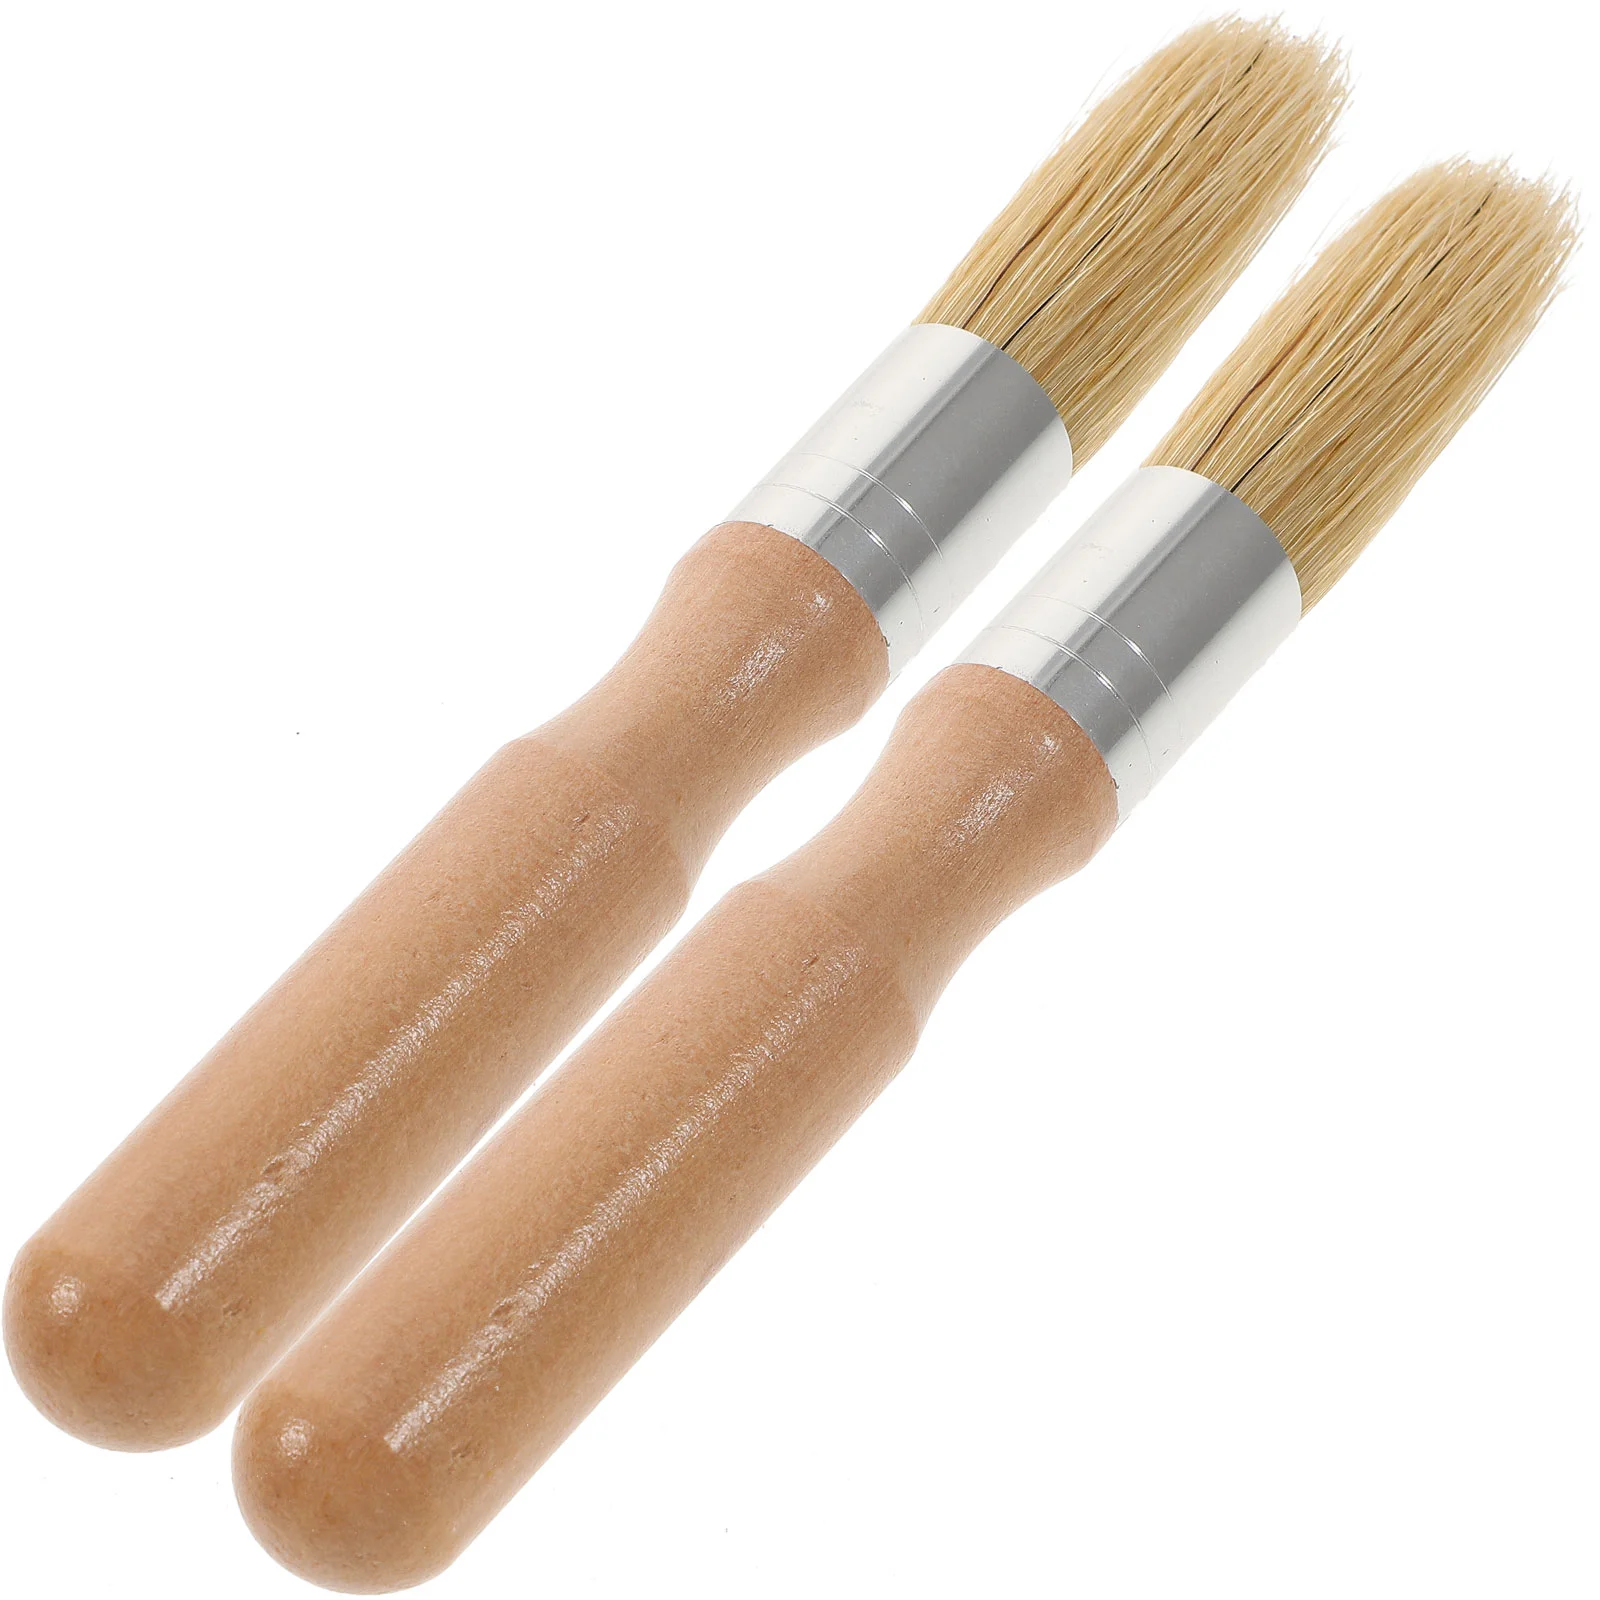 

2pcs Brush Set Painting Tool Round Nylon Brush Wooden Handle for Gouache Watercolor Oil Painting Varnish Acrylic brushes